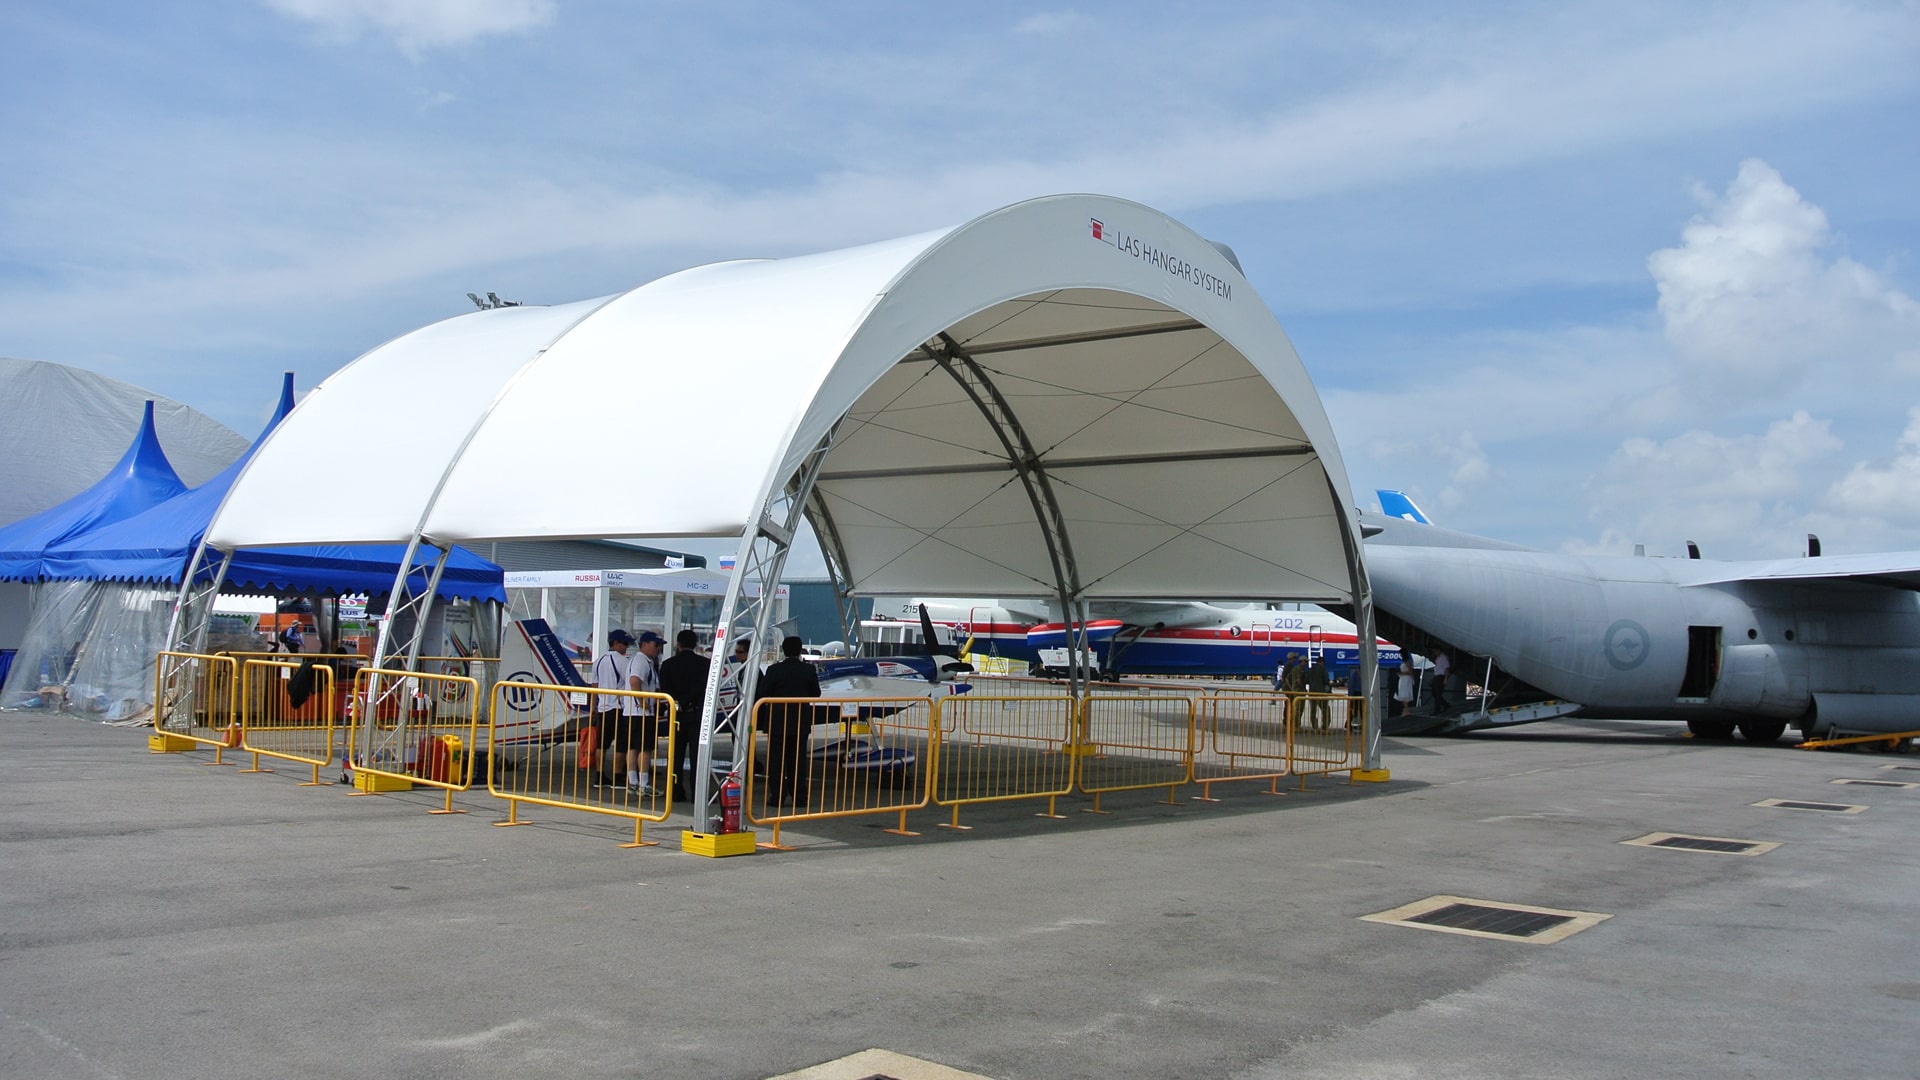 tsc_opt-images_mega-structures_singapore-air-show-aircraft-hangar-structure-1920x1080-01-min